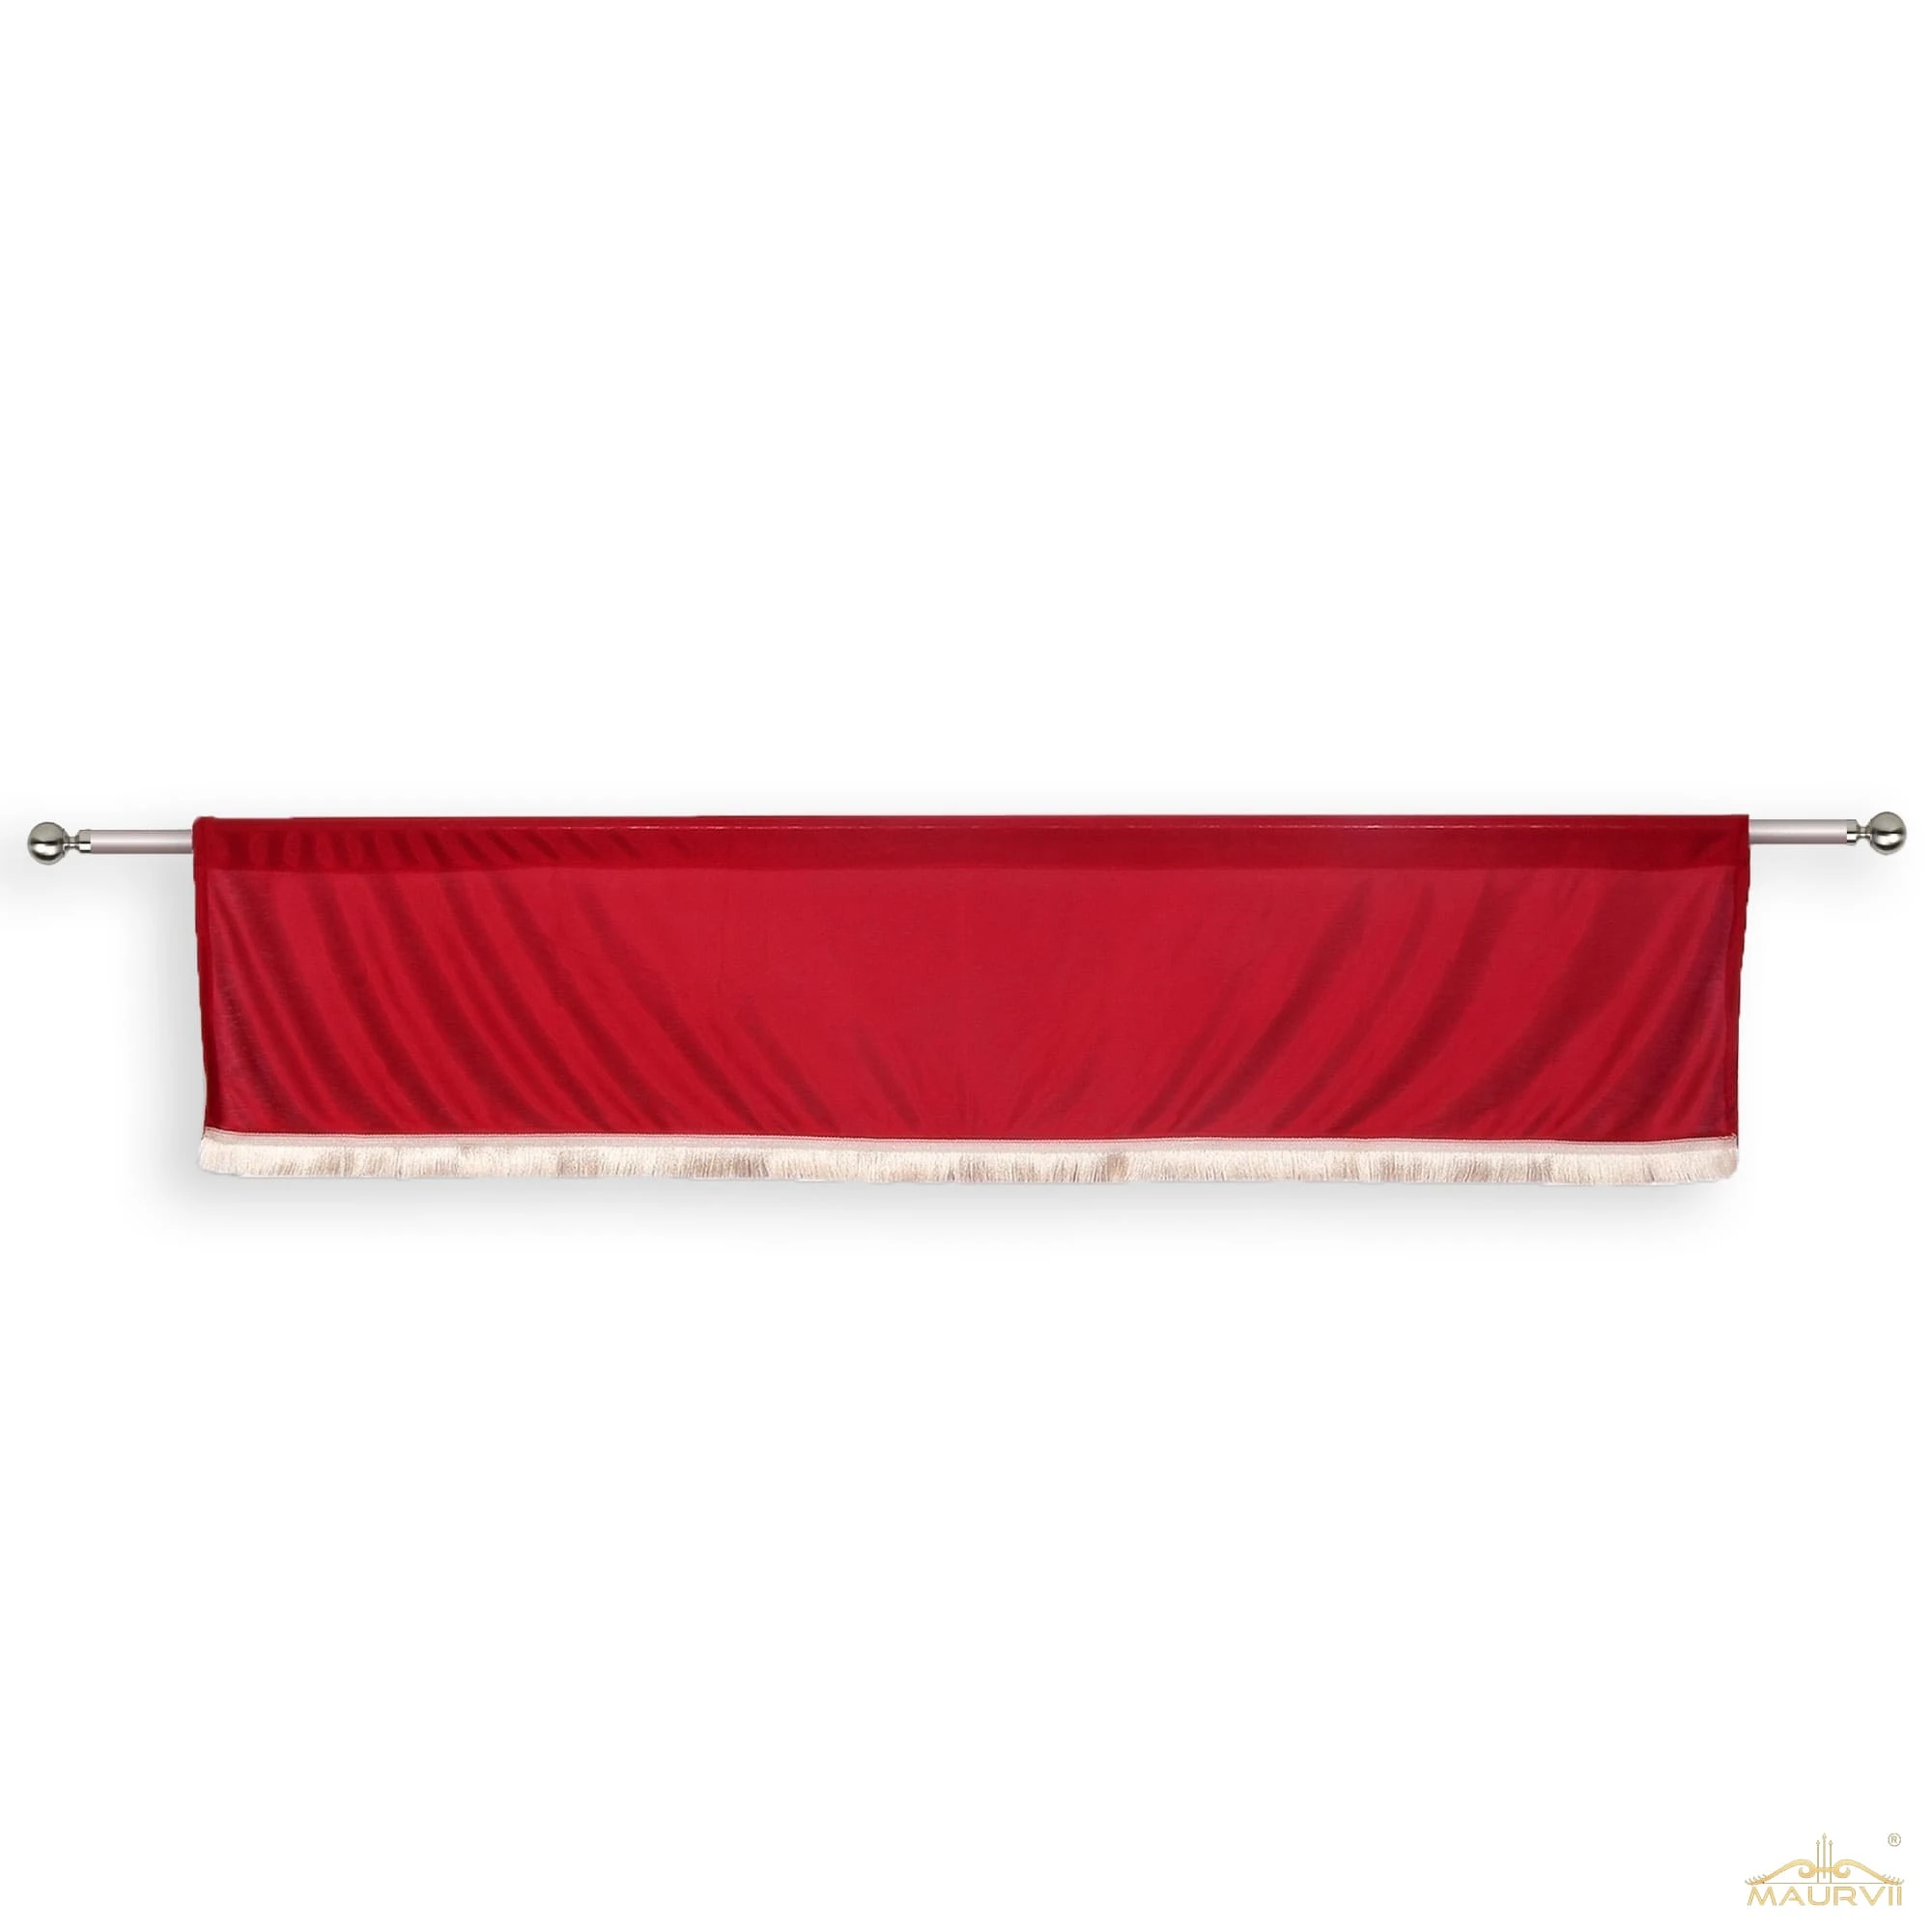 Red fringe valance curtains